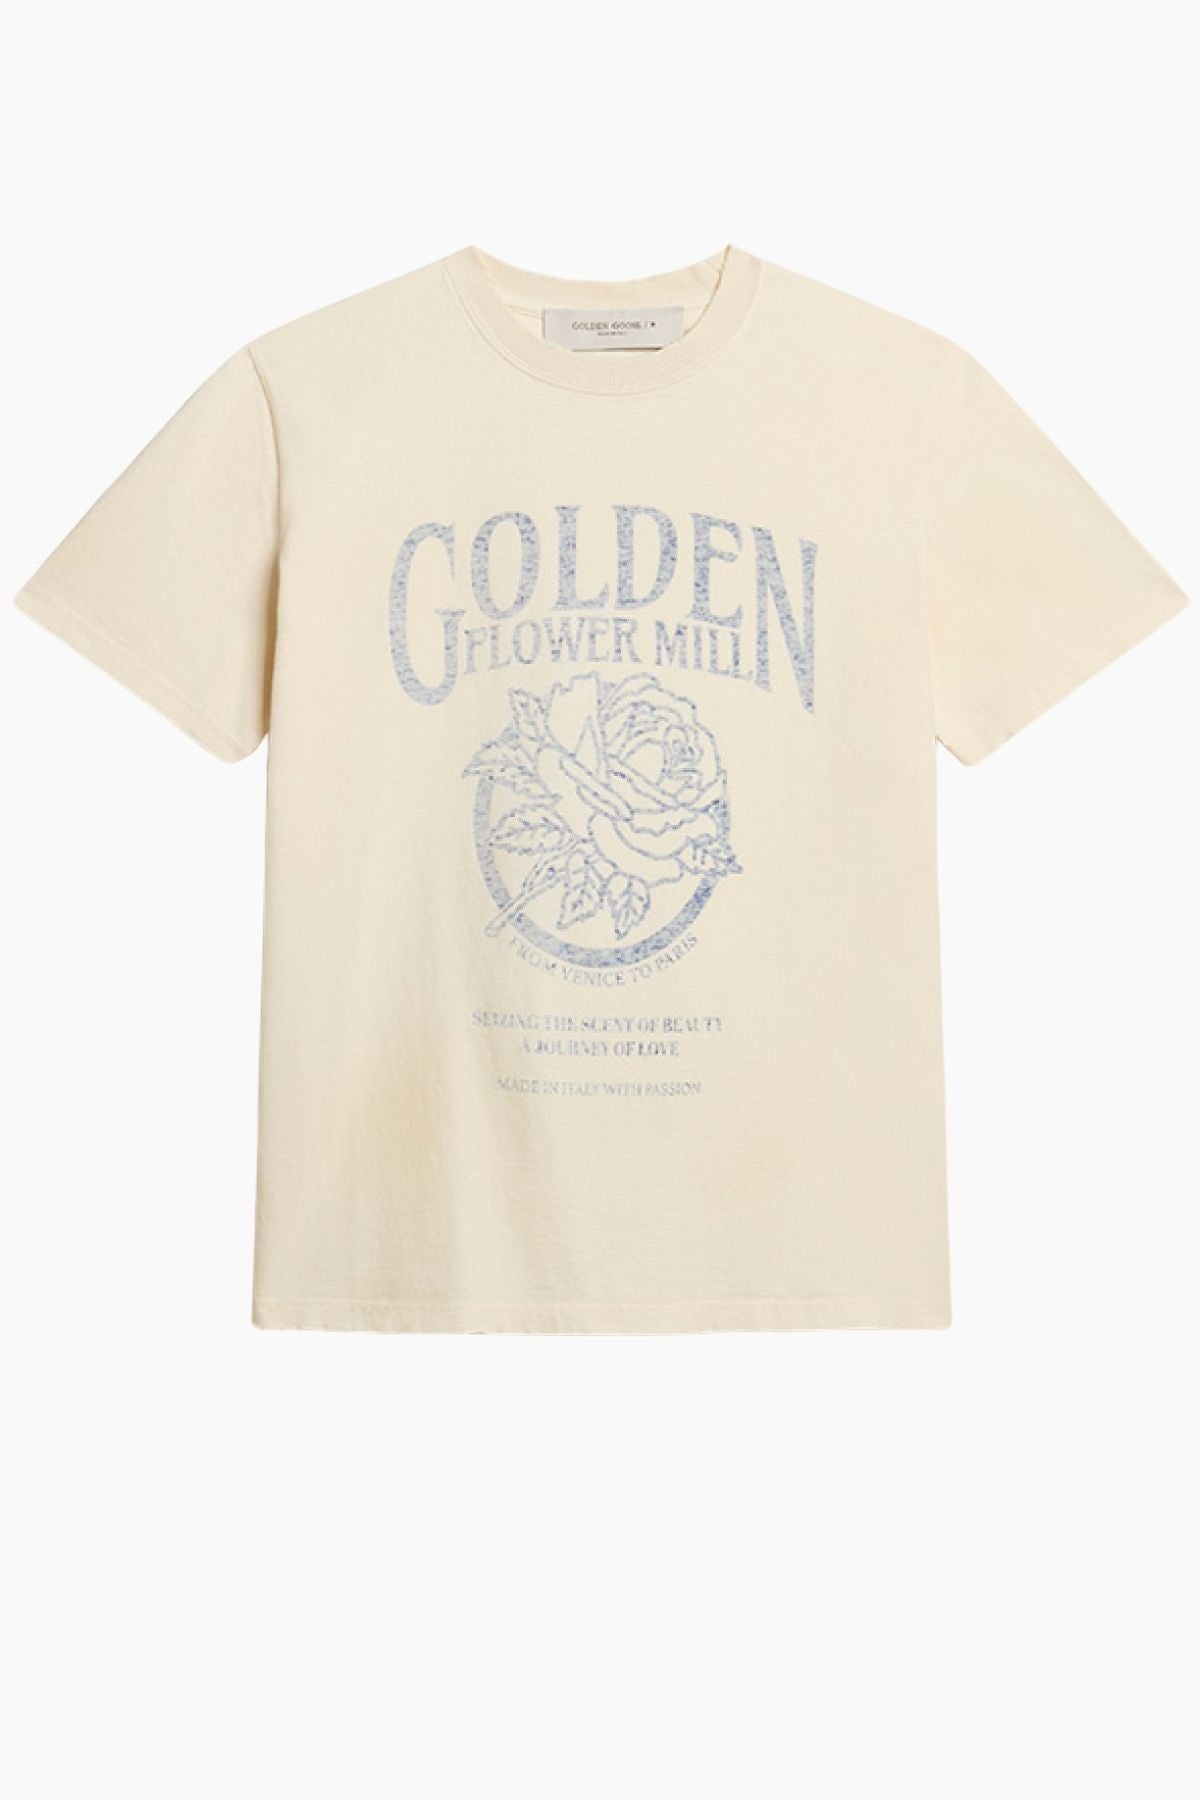 Golden Goose Distressed Rib T-Shirt - Heritage White